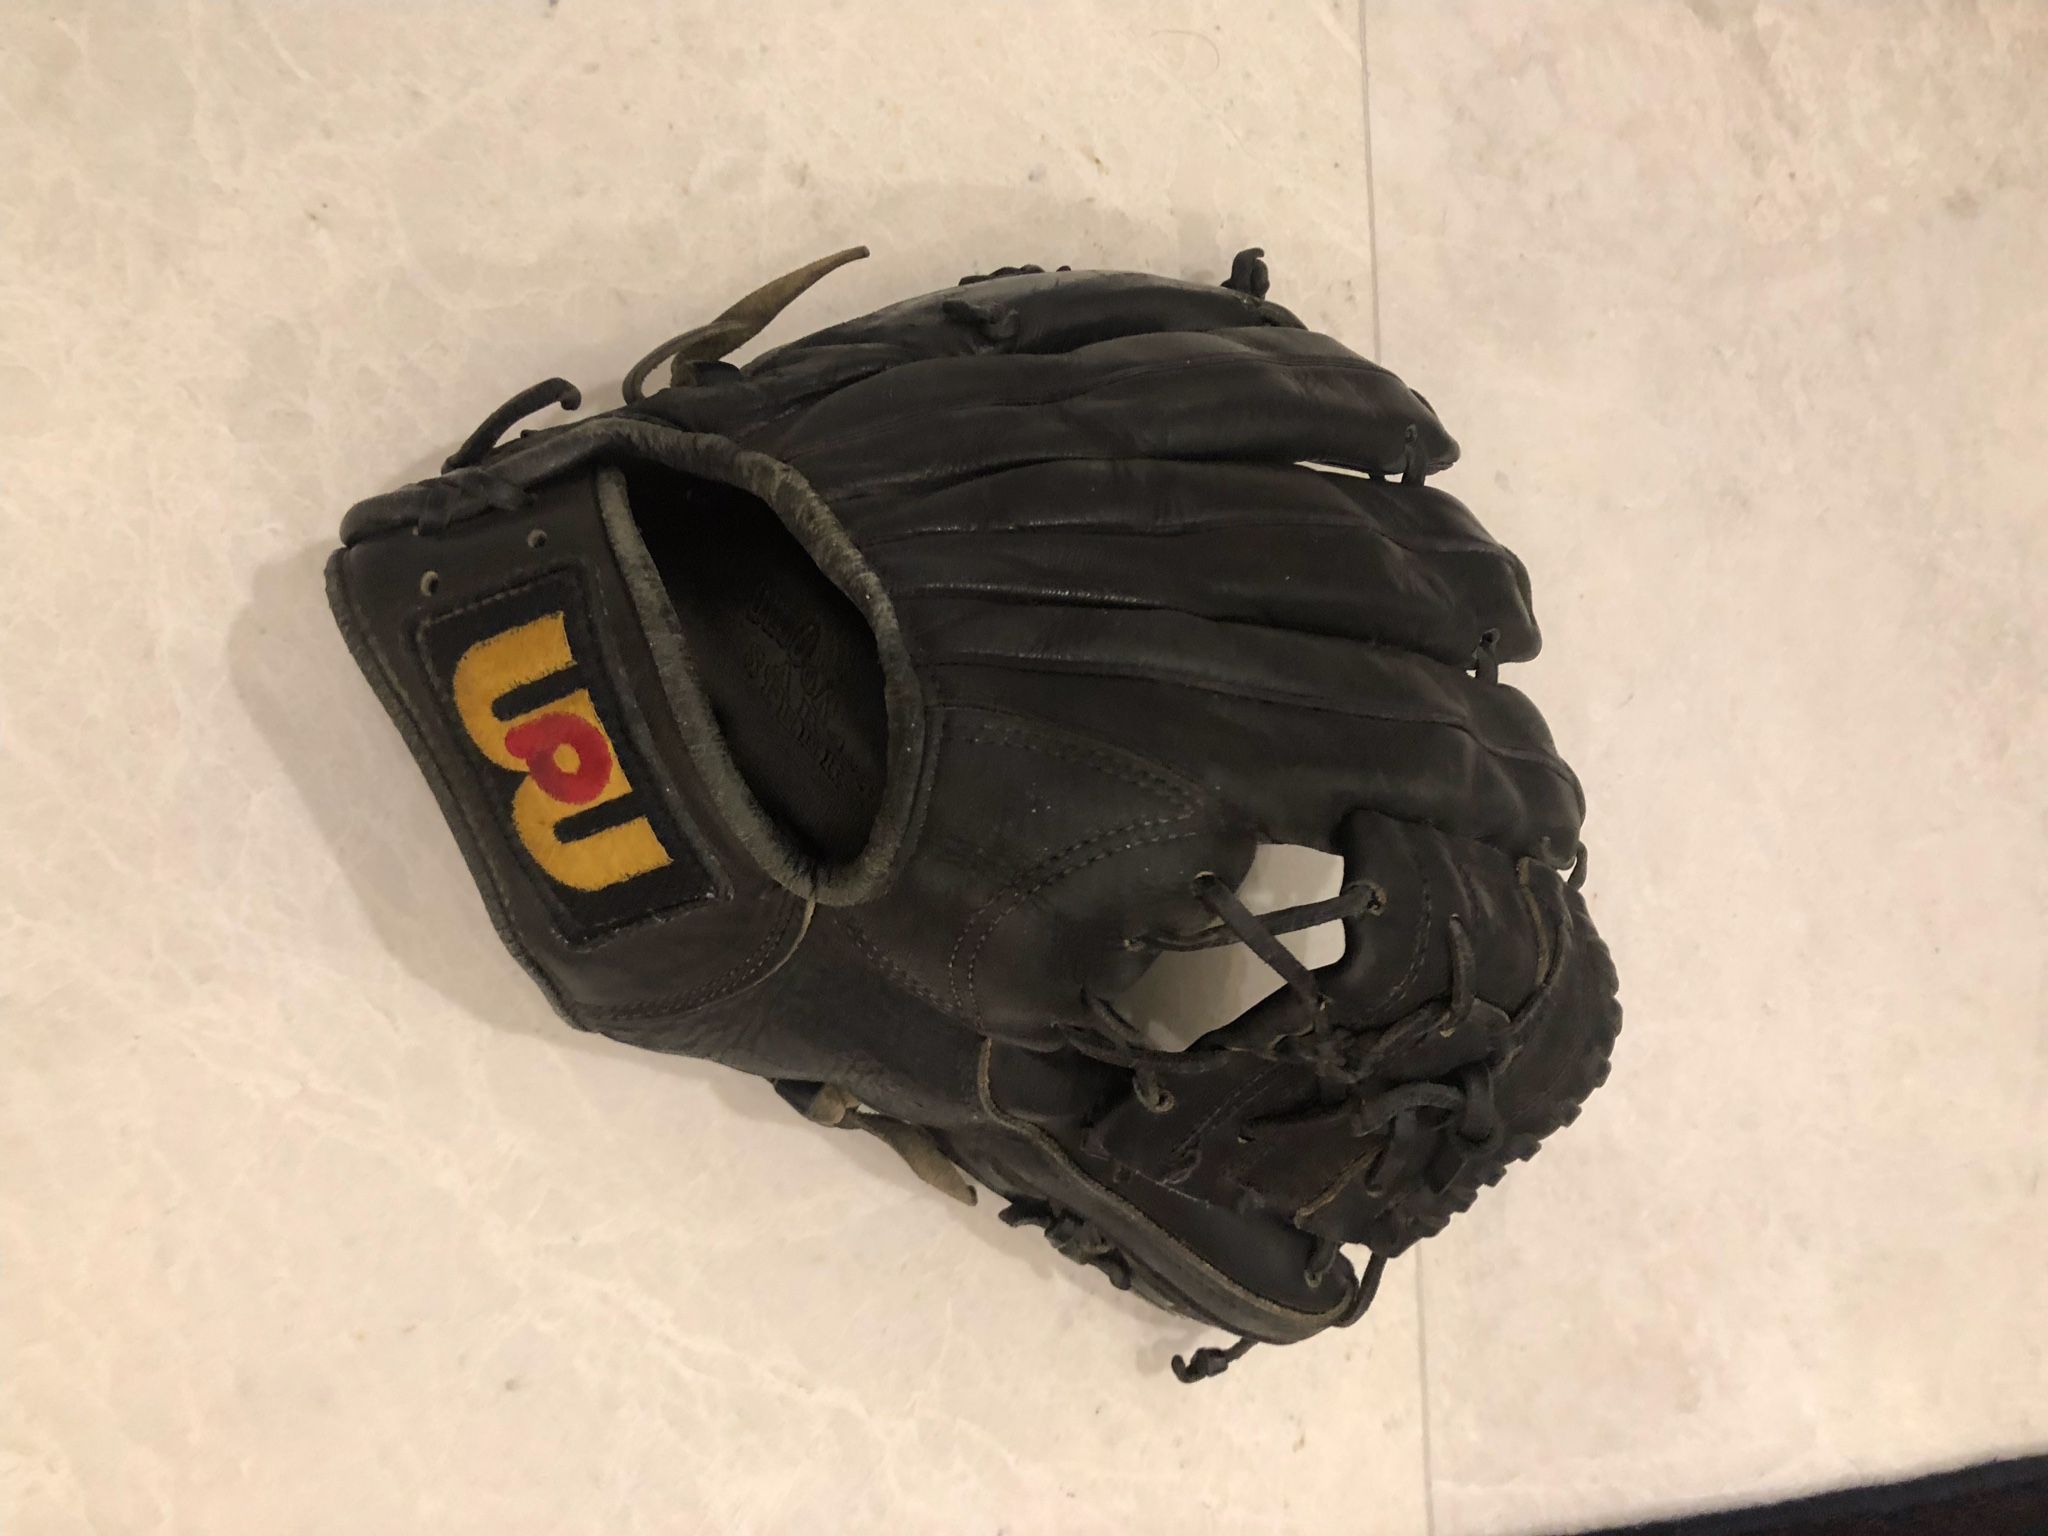  Baseball Leather Glove By World Pegasus